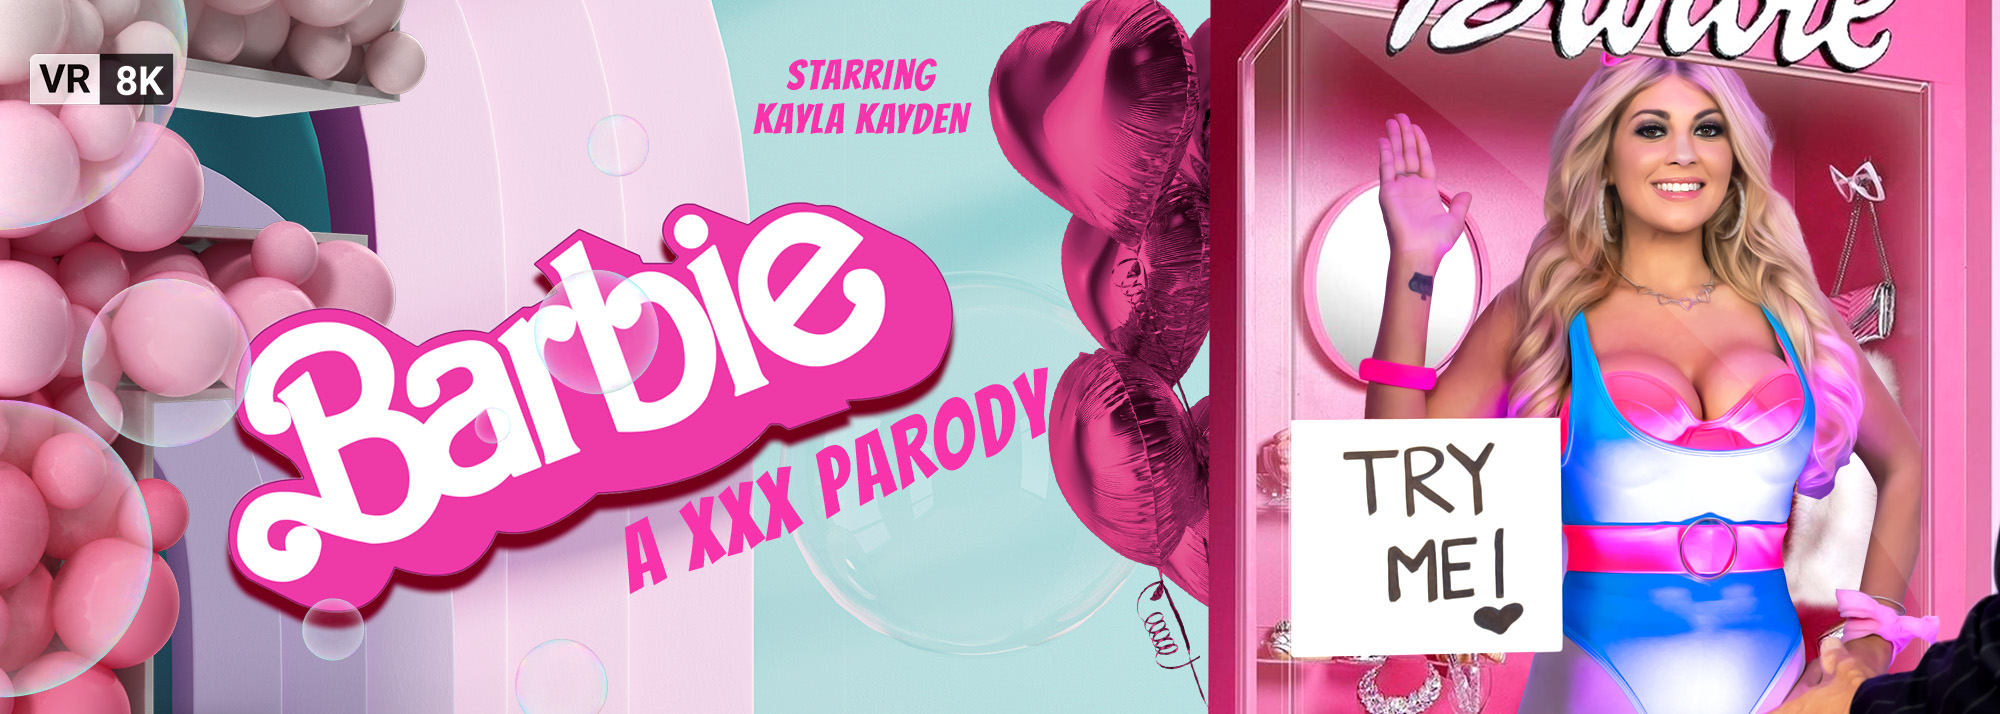 Barbie (A XXX Parody) - VR Porn Video, Starring Kayla Kayden VR